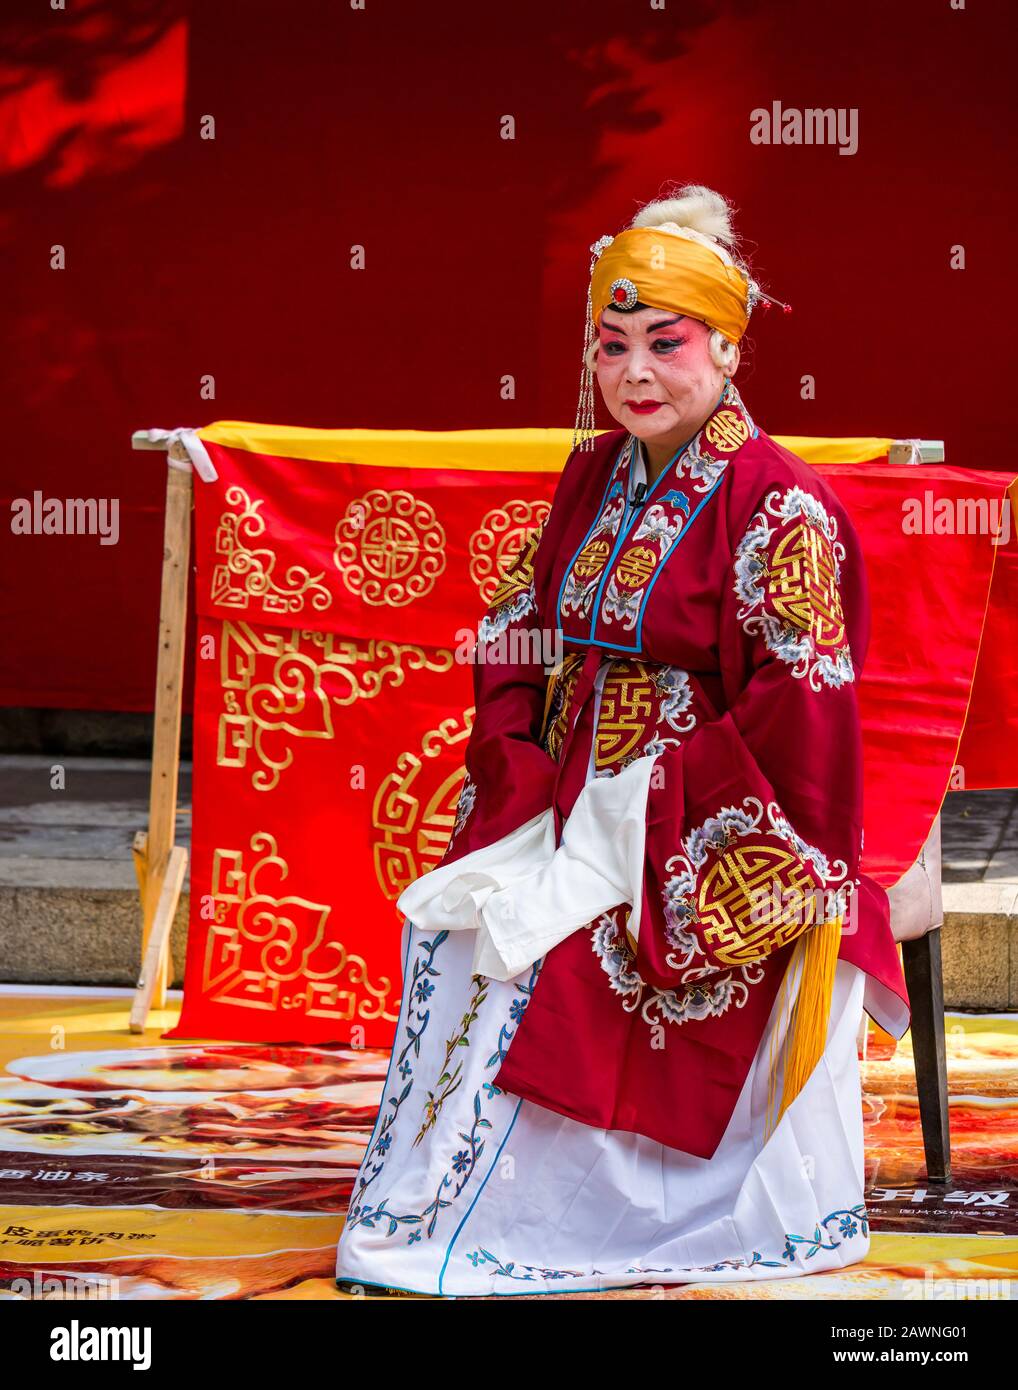 Man performing outdoor Peking opera in colourful costumes, Xi Cheng Hutong District, Beijing, China Stock Photo